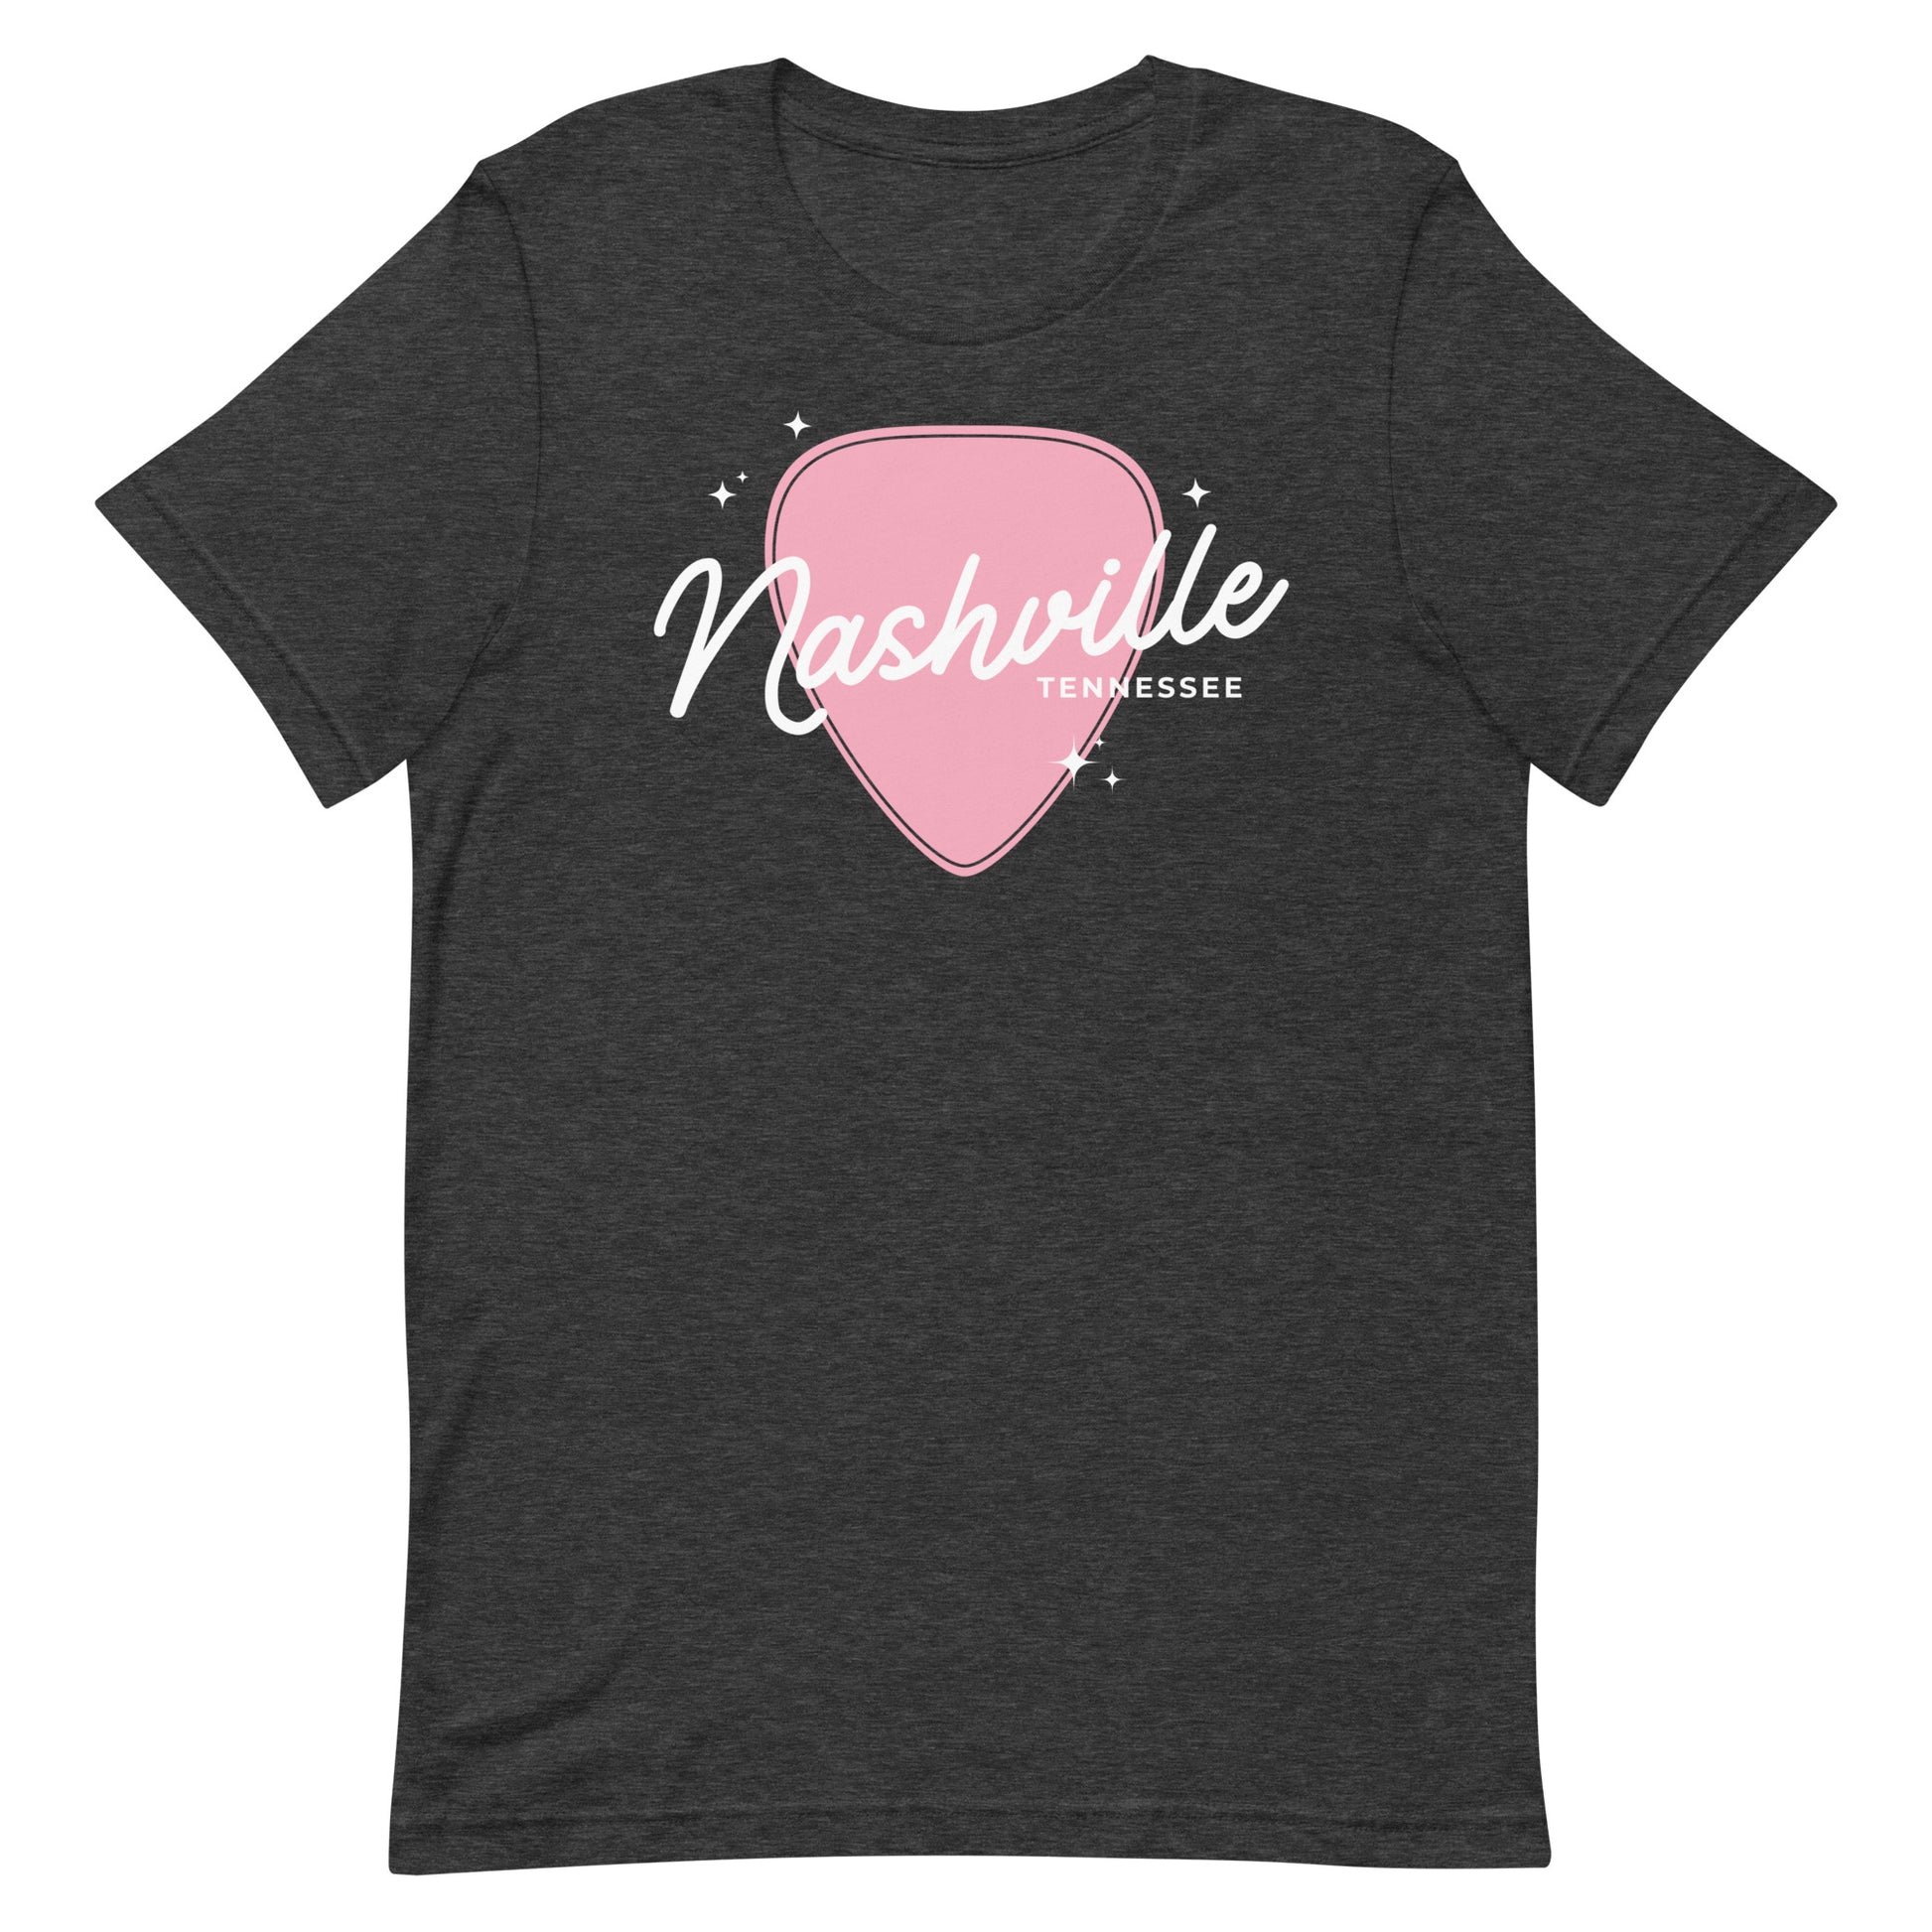 Nashville t-shirt in black for girls trip